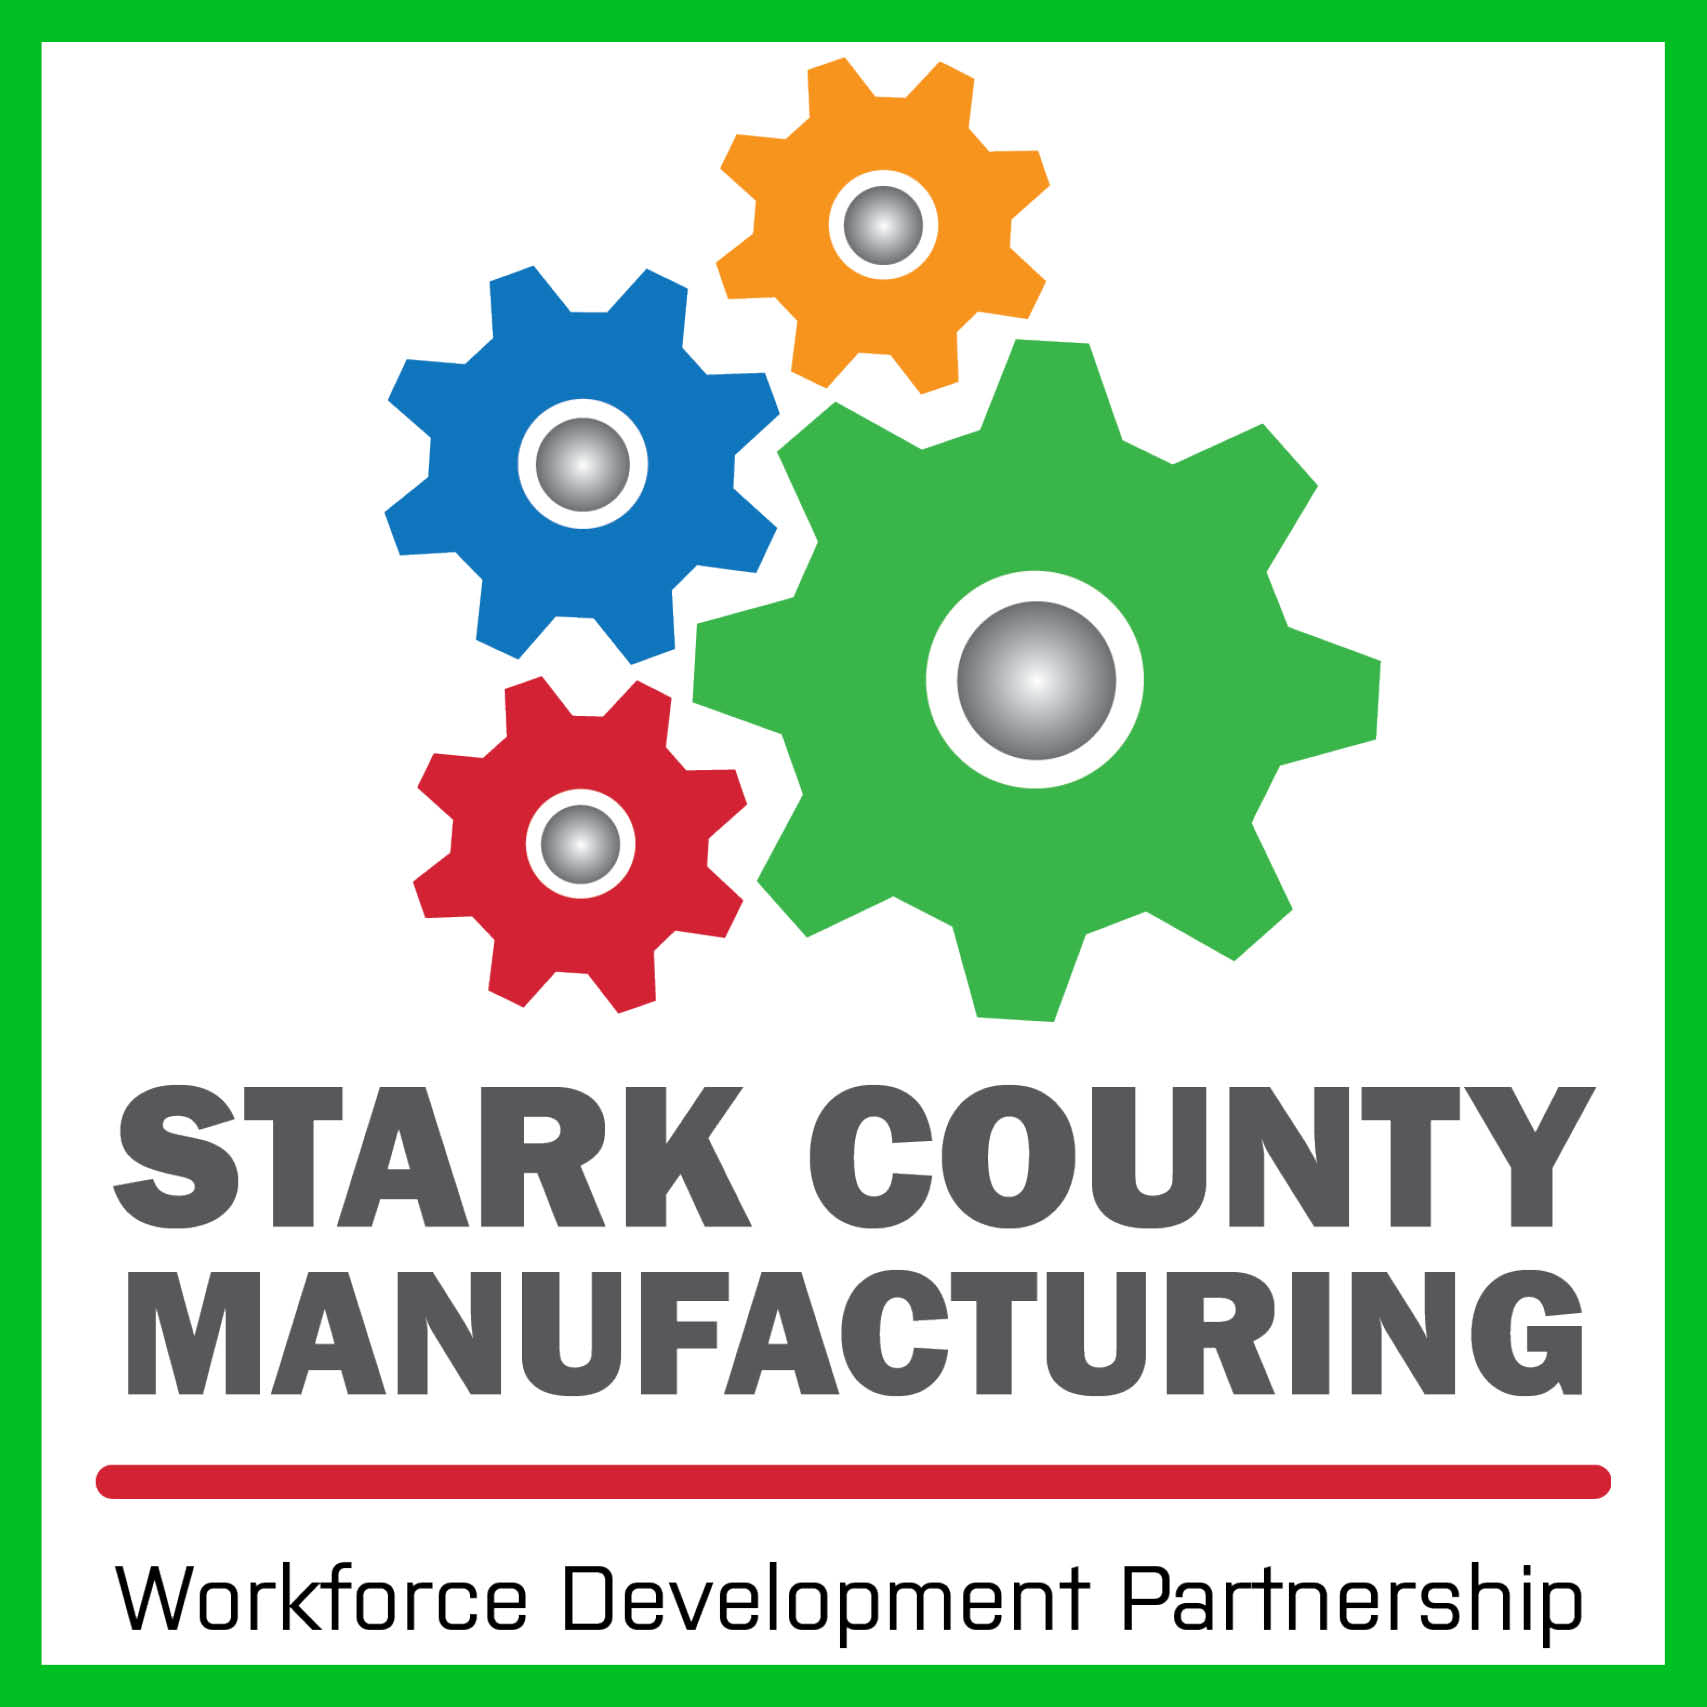 Stark County Manufacturing Workforce Development Partnership Highlight